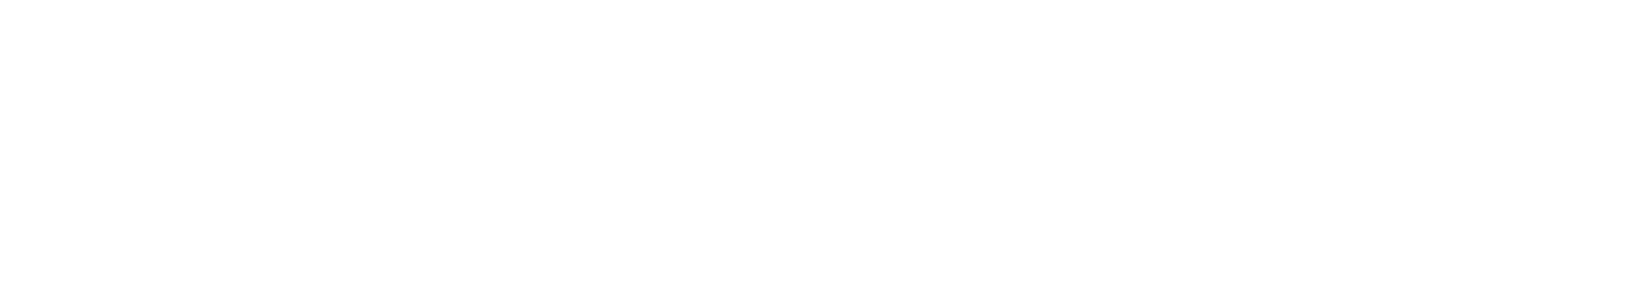 Medienvertrieb Riesa GmbH